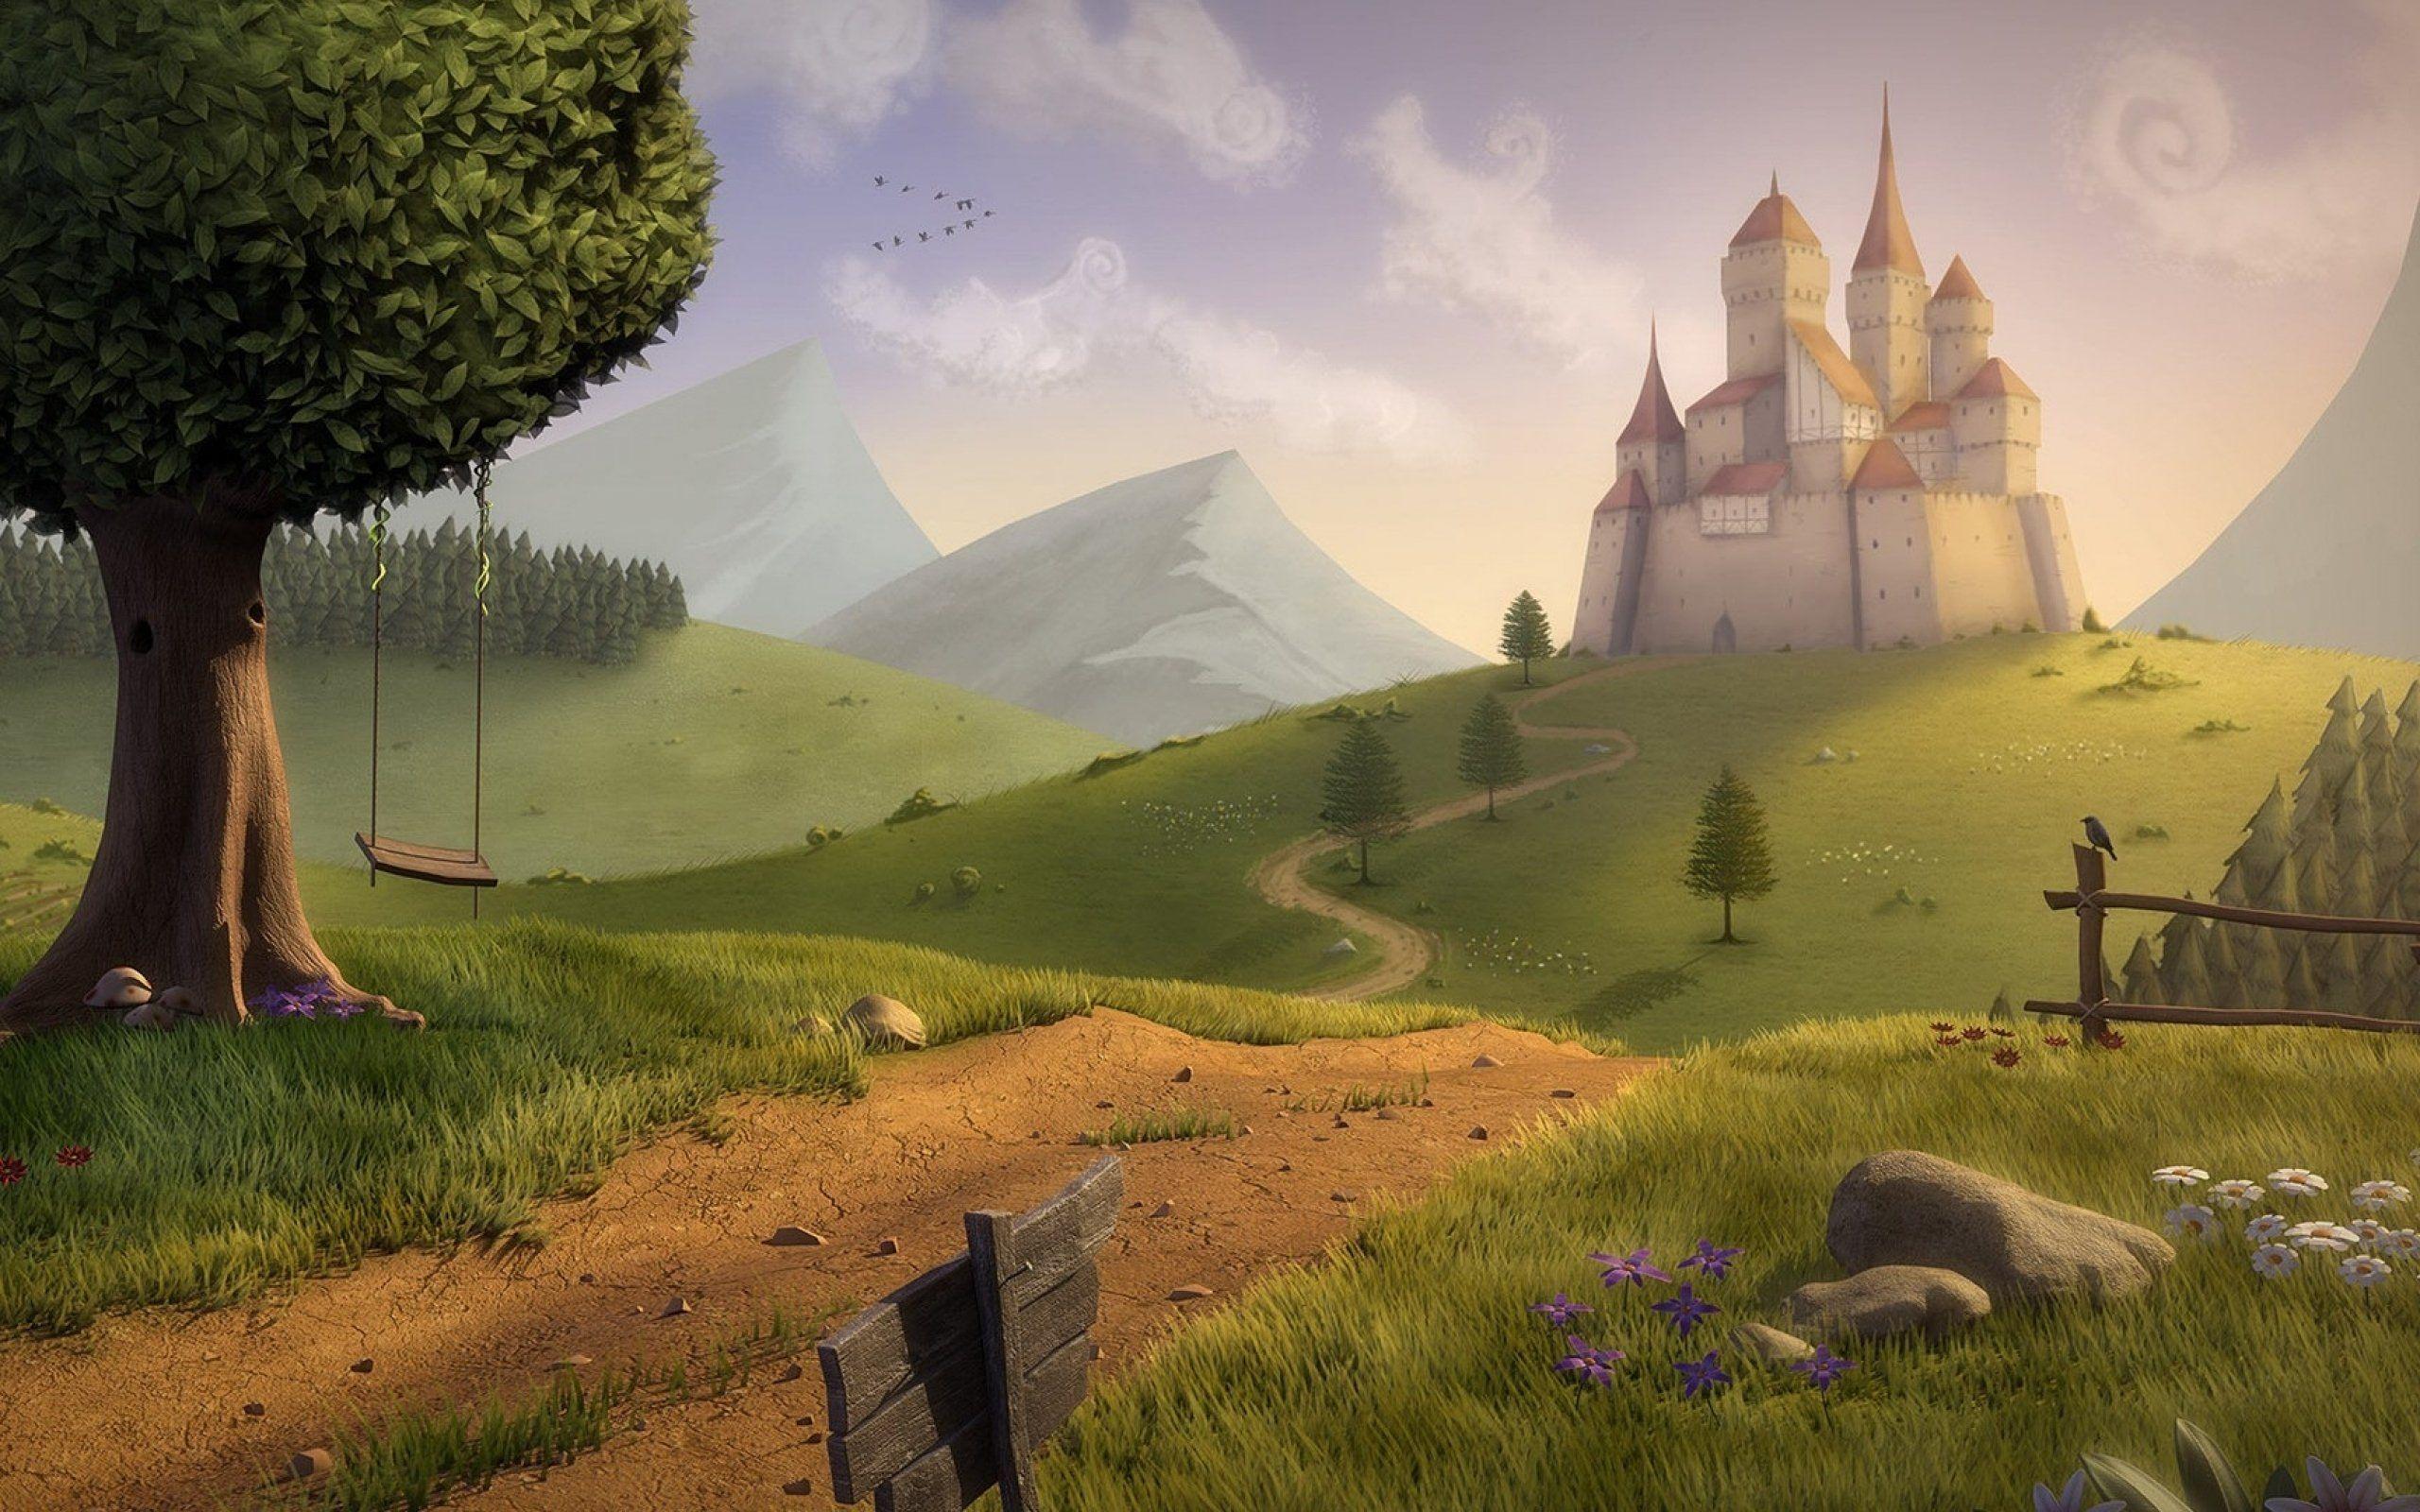 Fairytale Castle Wallpaper. Home style. Fantasy landscape